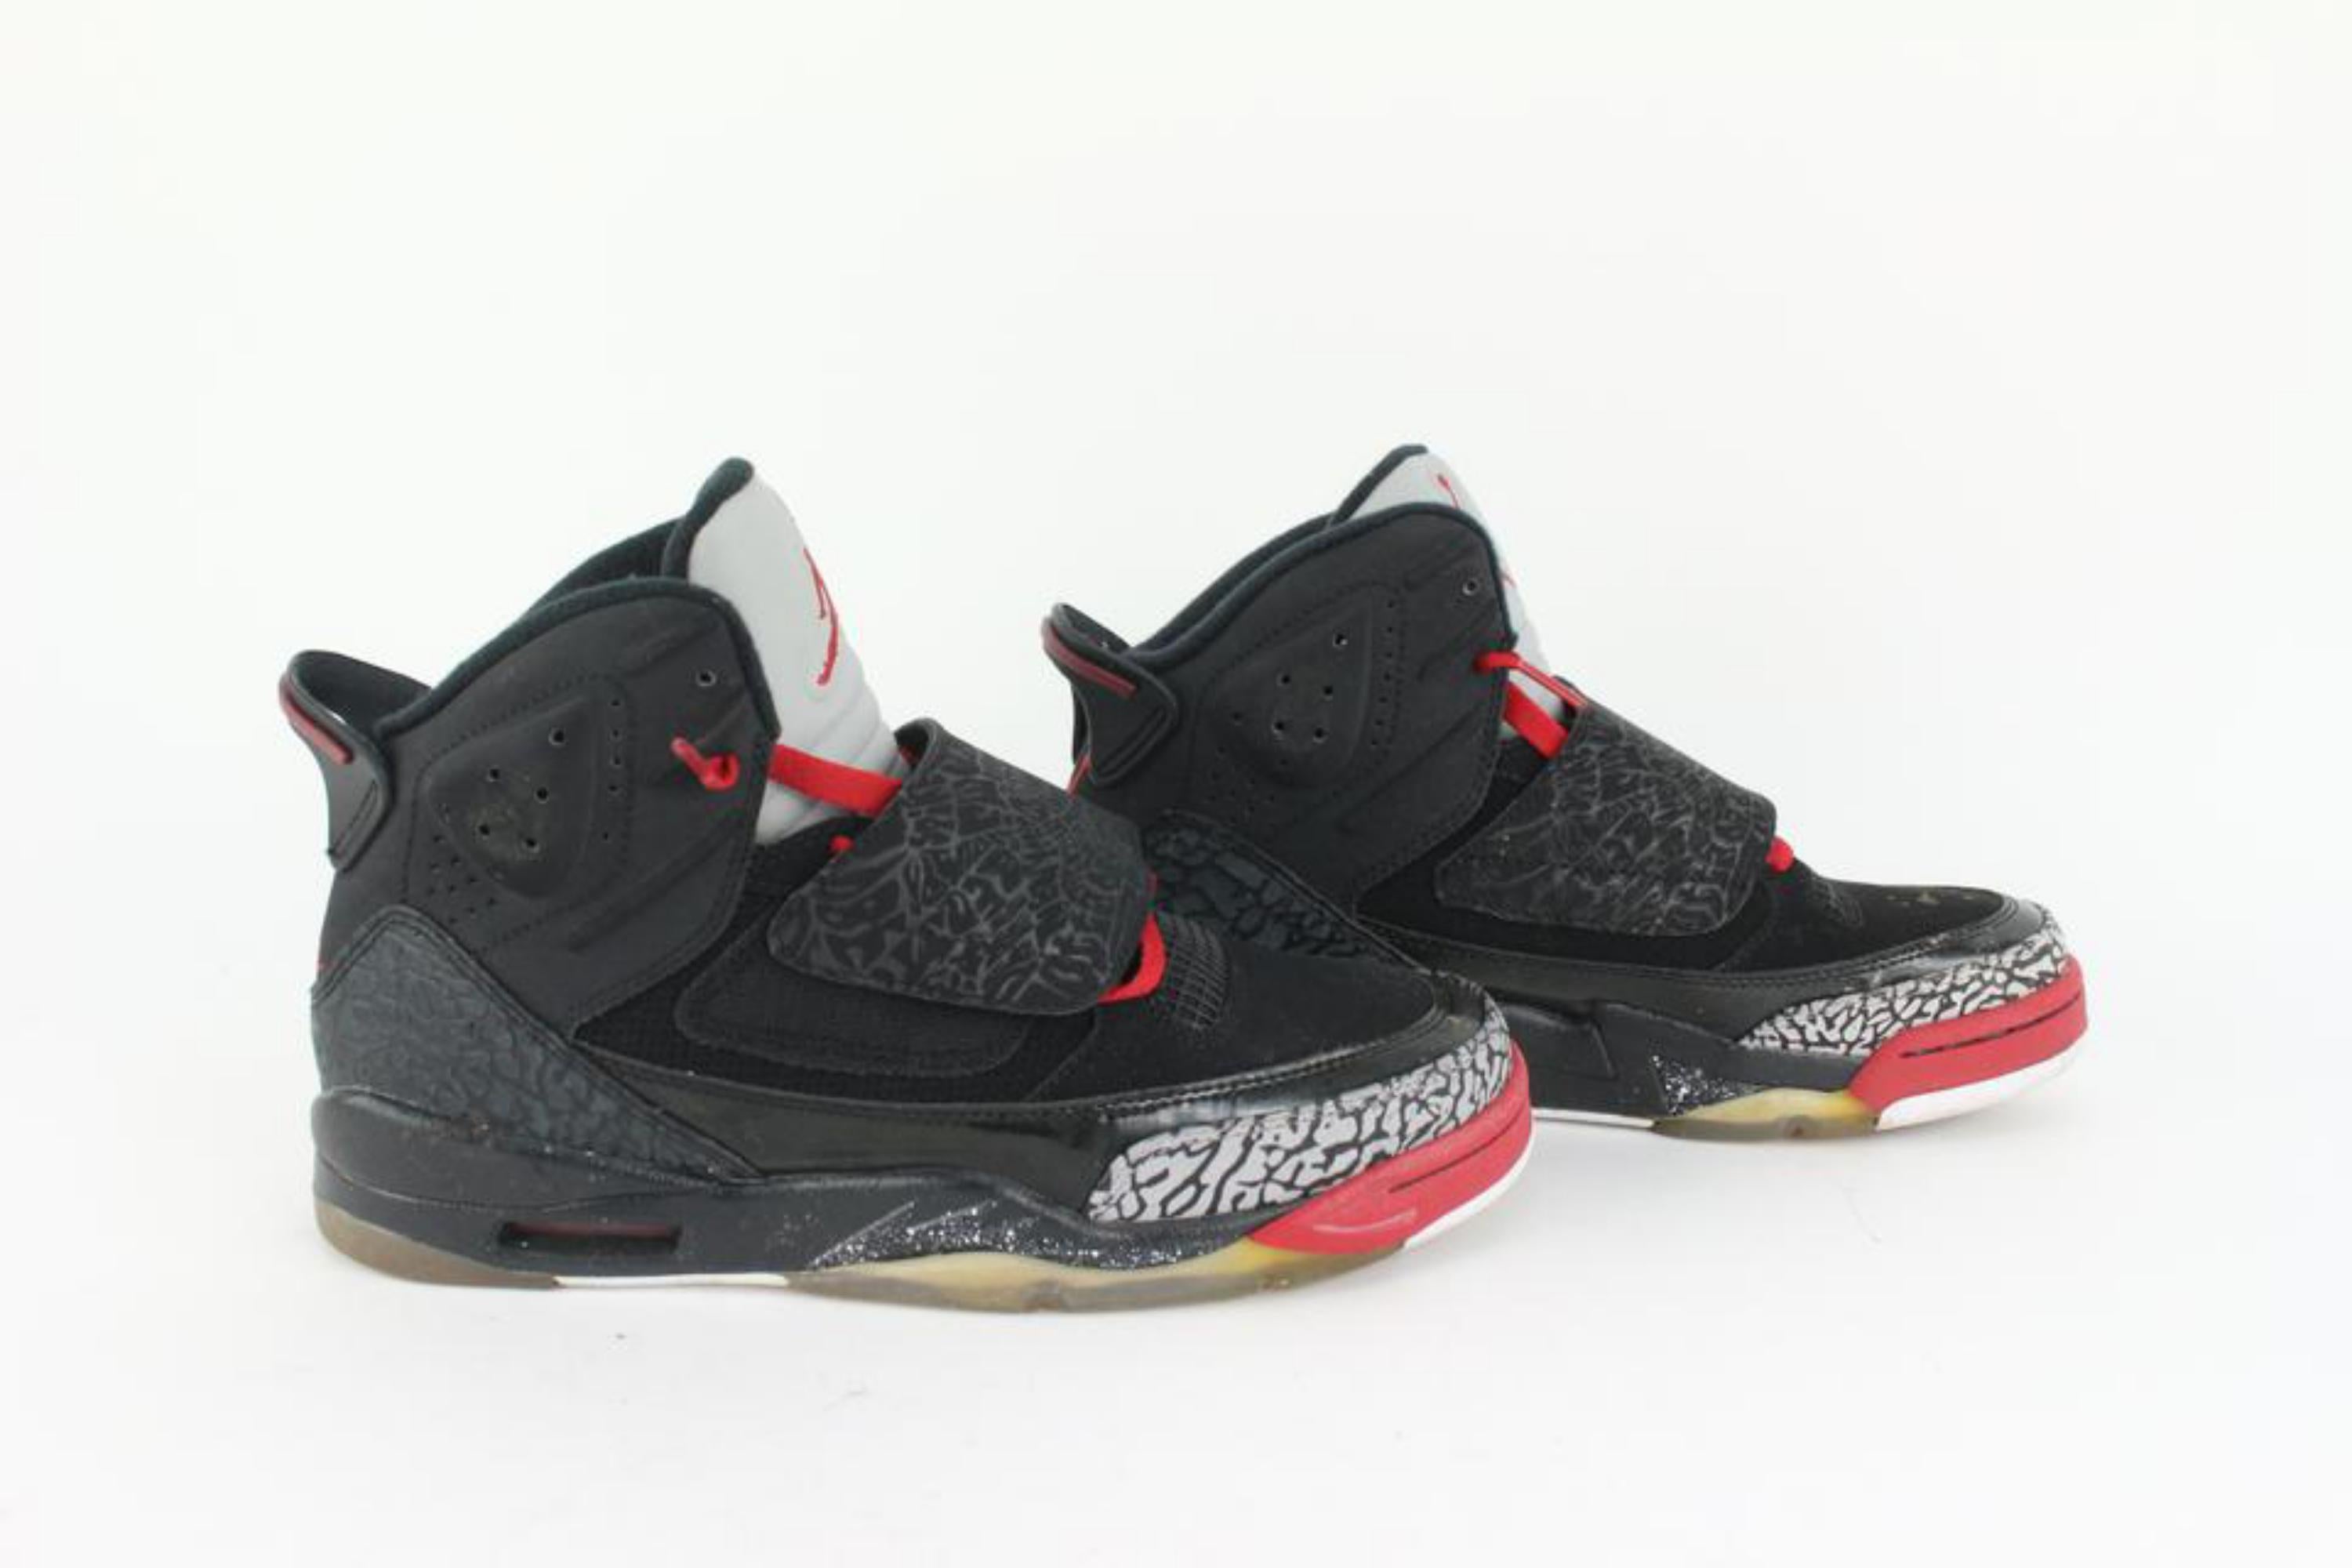 Nike 2012 Youth 7US Cement Black Red Air Jordan Son of Mars 512246-001 2